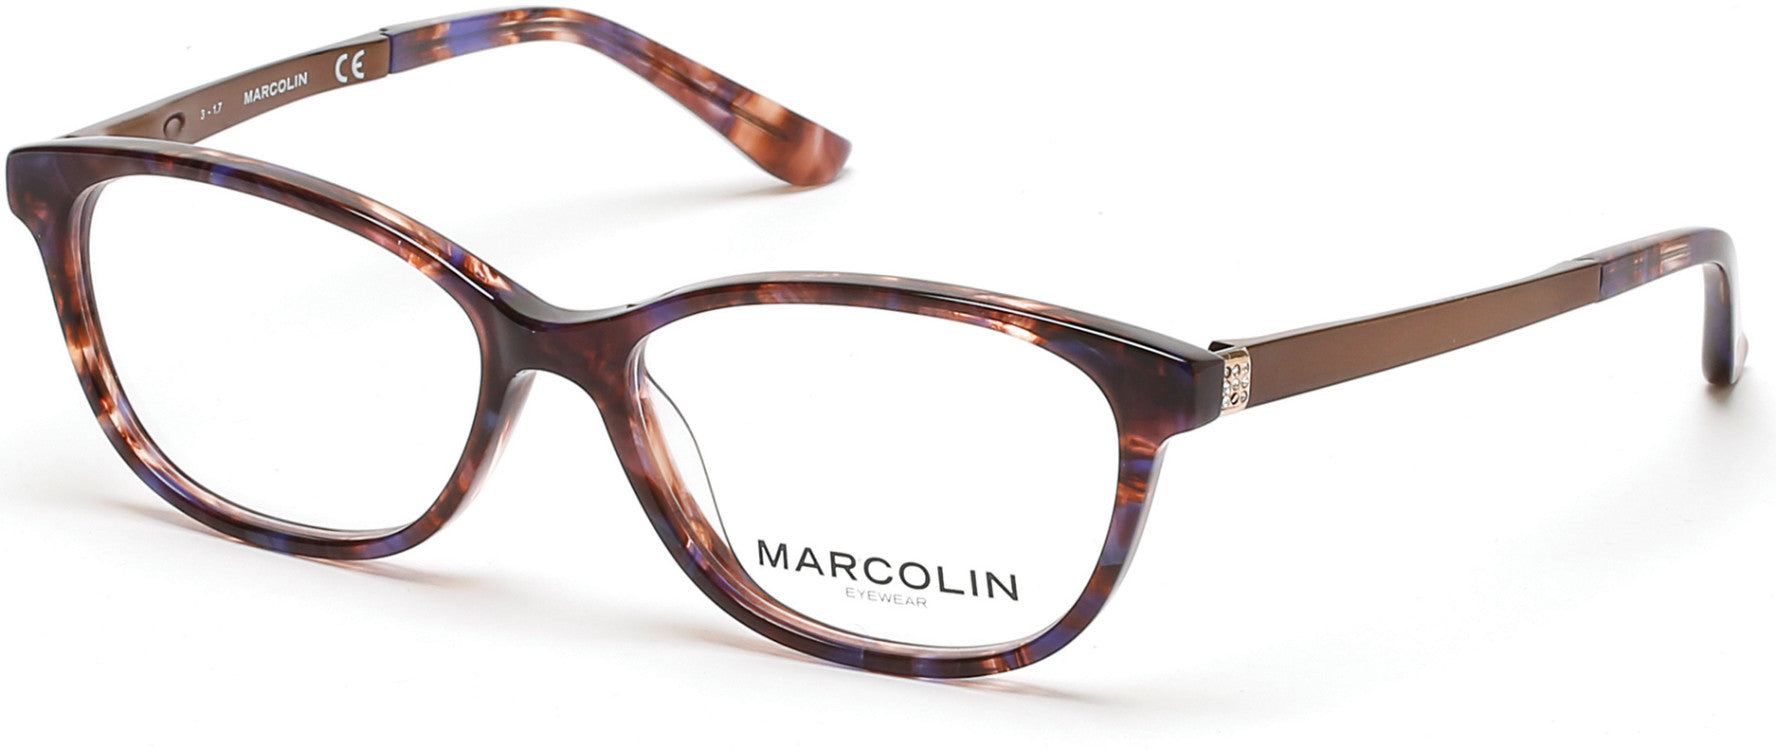 Marcolin MA5010 Eyeglasses 047-047 - Light Brown